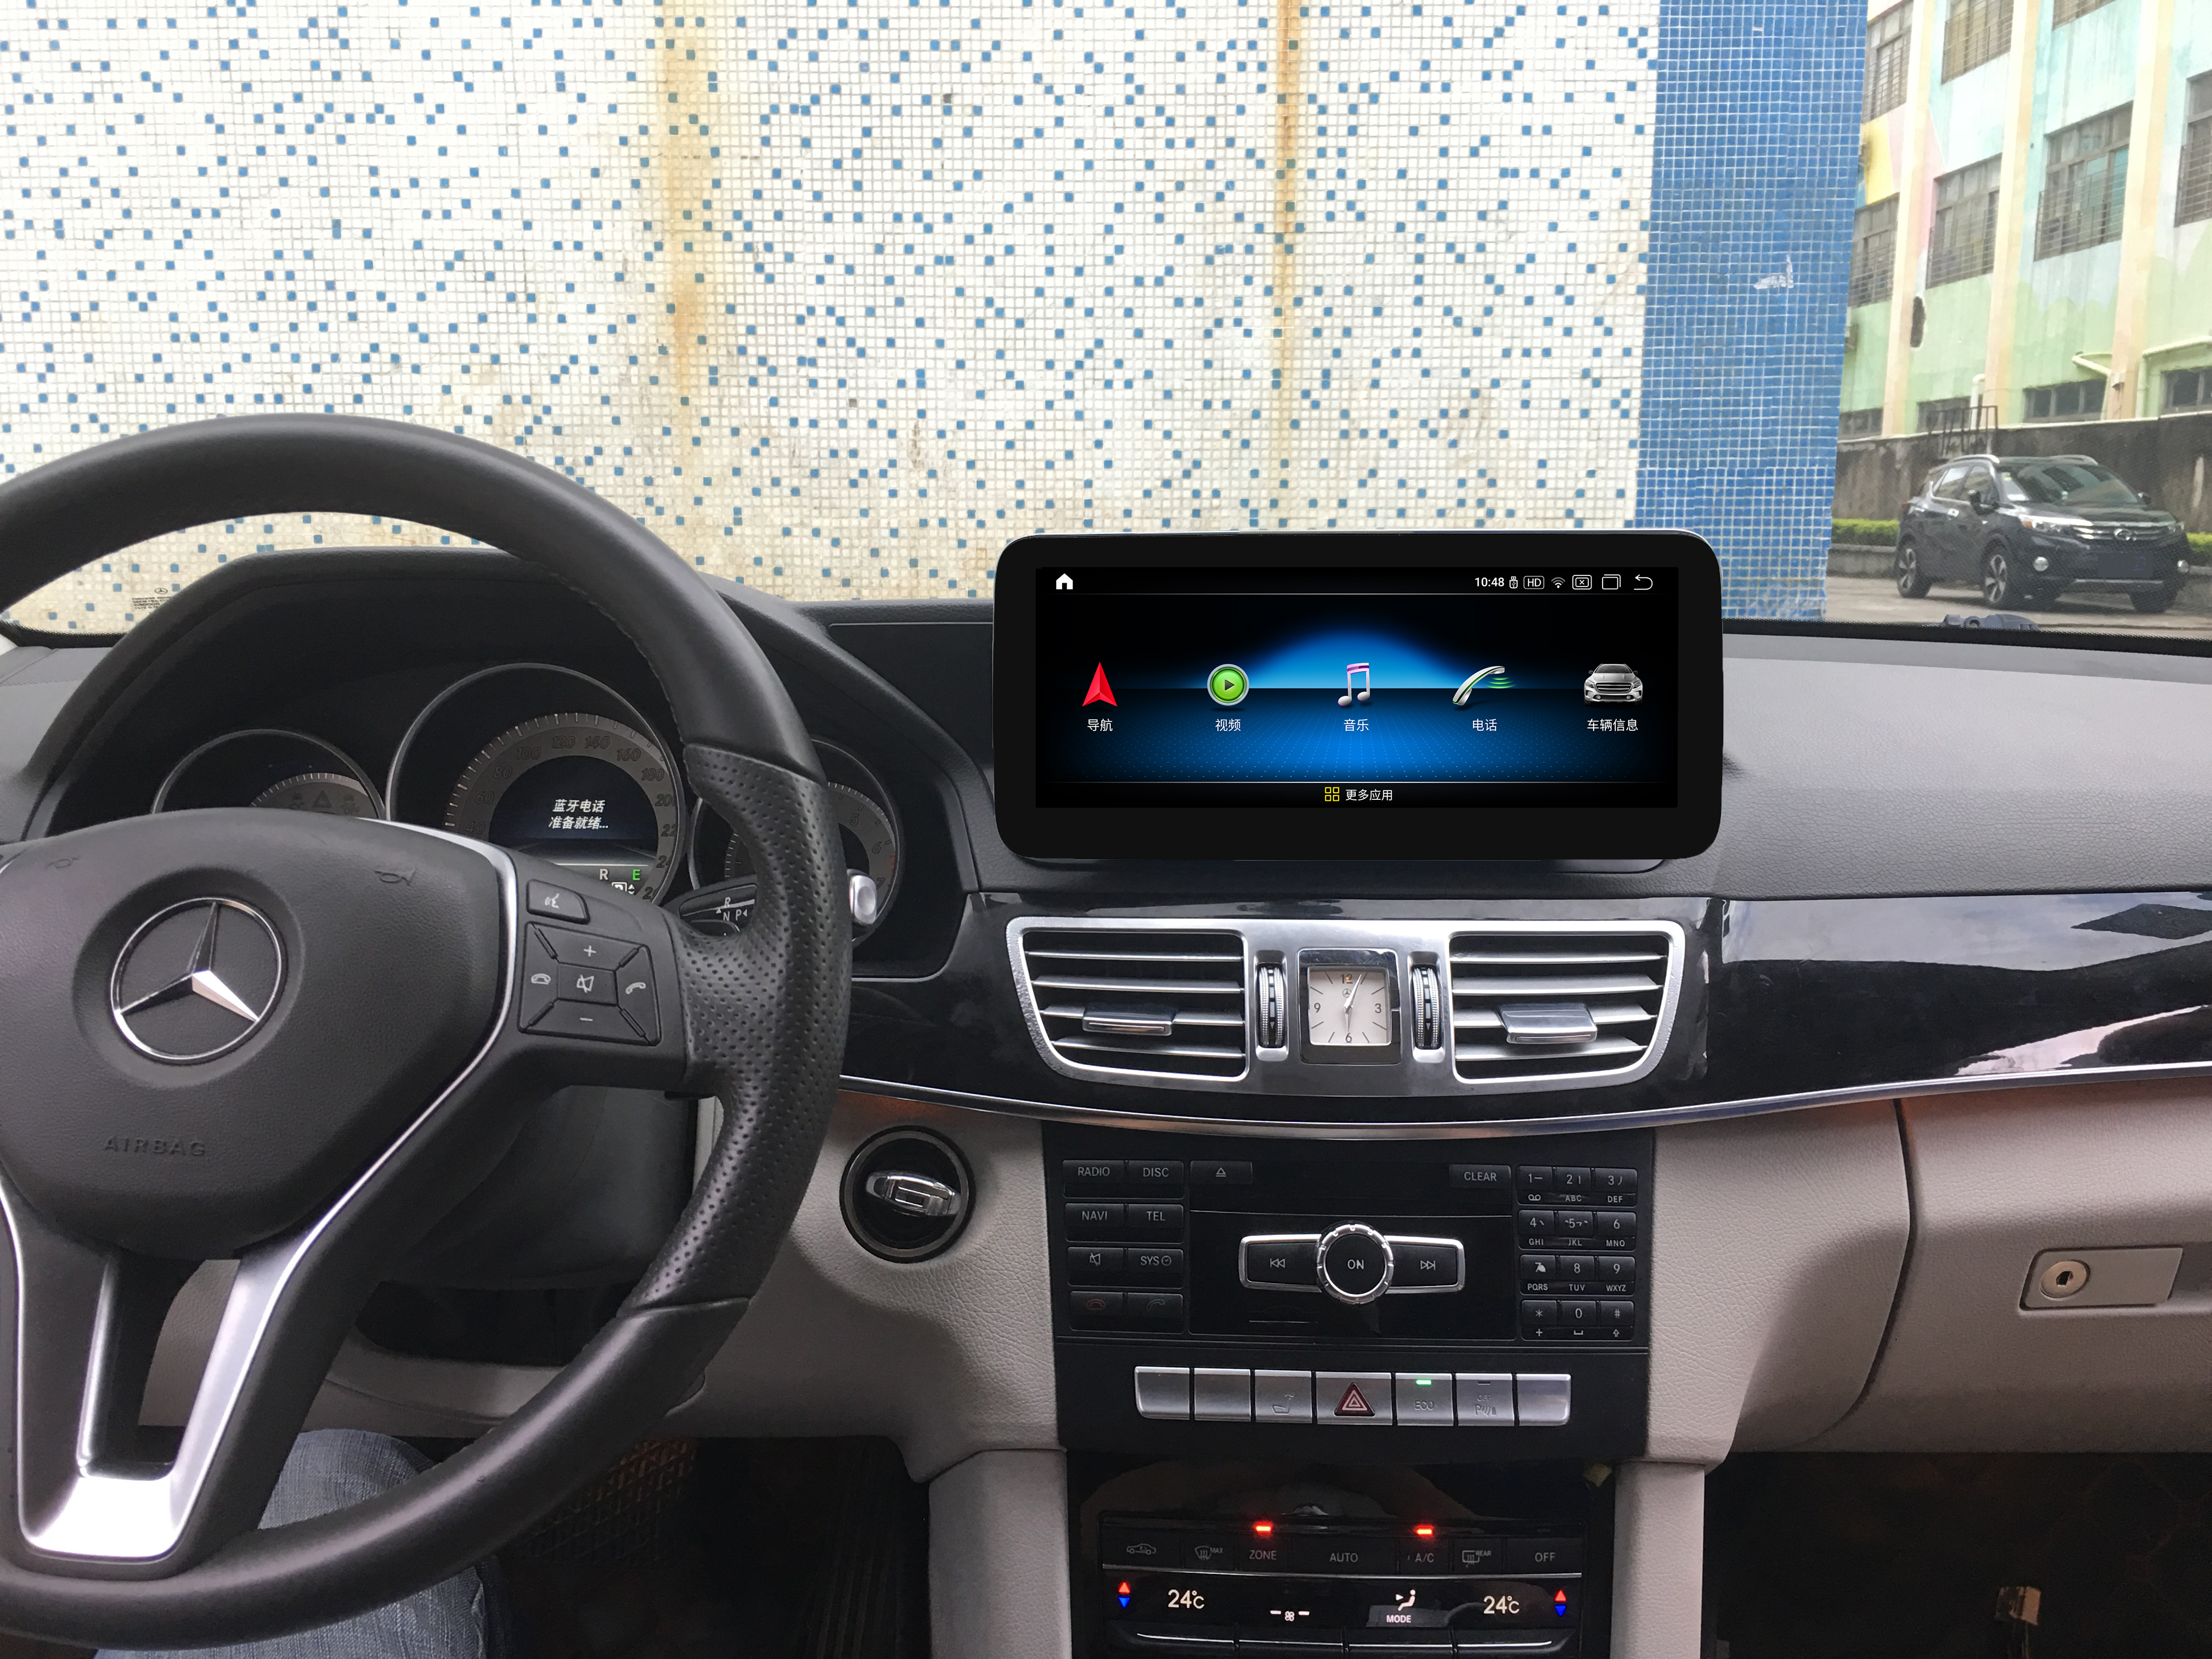 Mercedes Benz E Class W207 RHD NTG4.0 Car Video Navigation Android Gps Radio 2010 - 2012